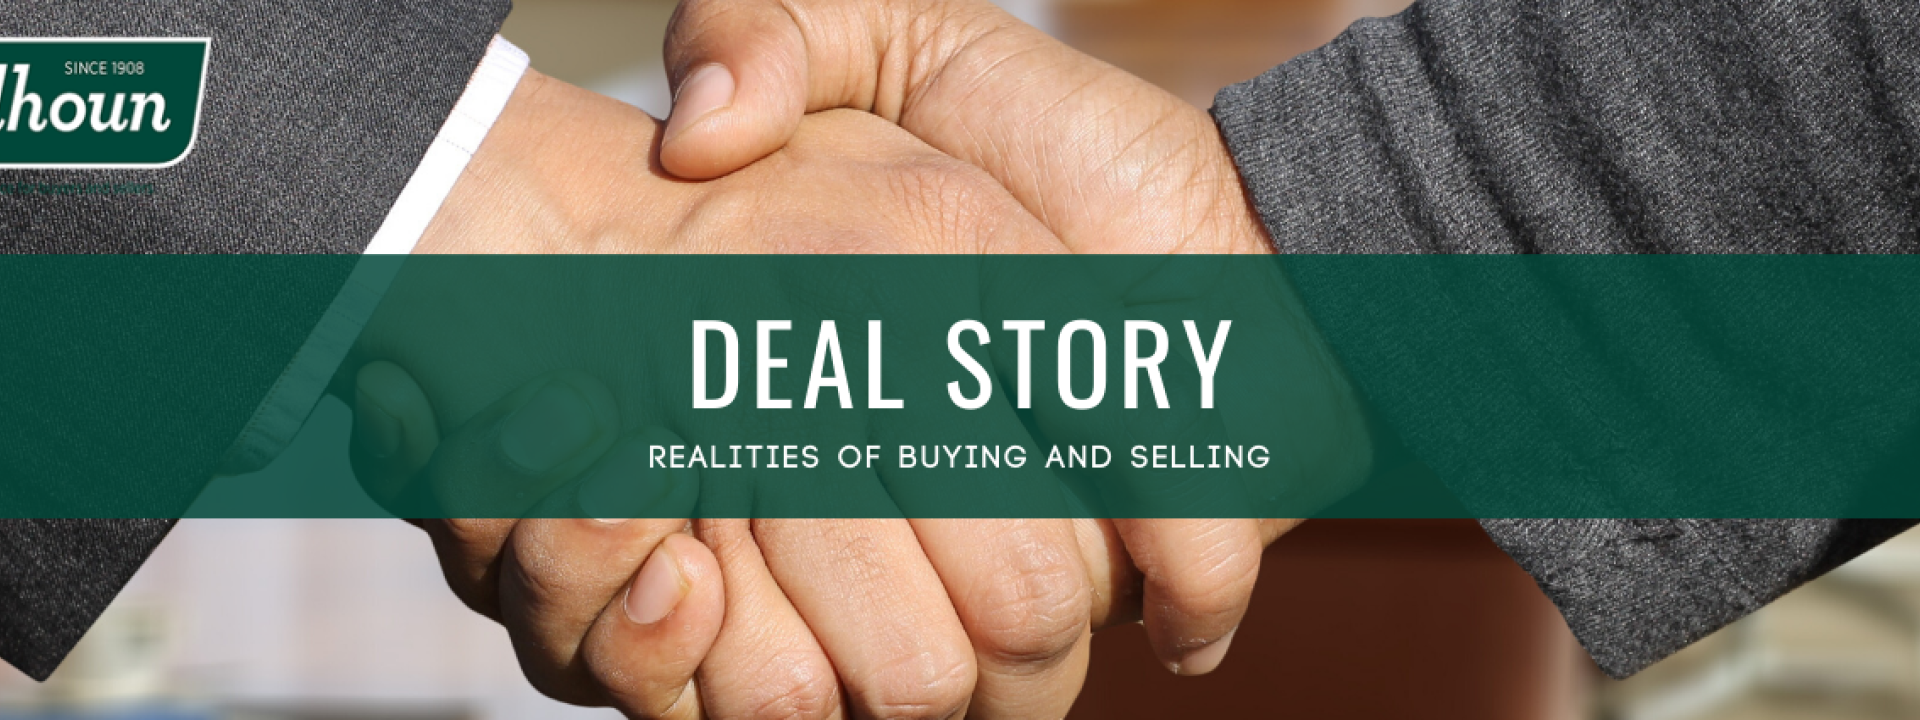 Deal Story Banner